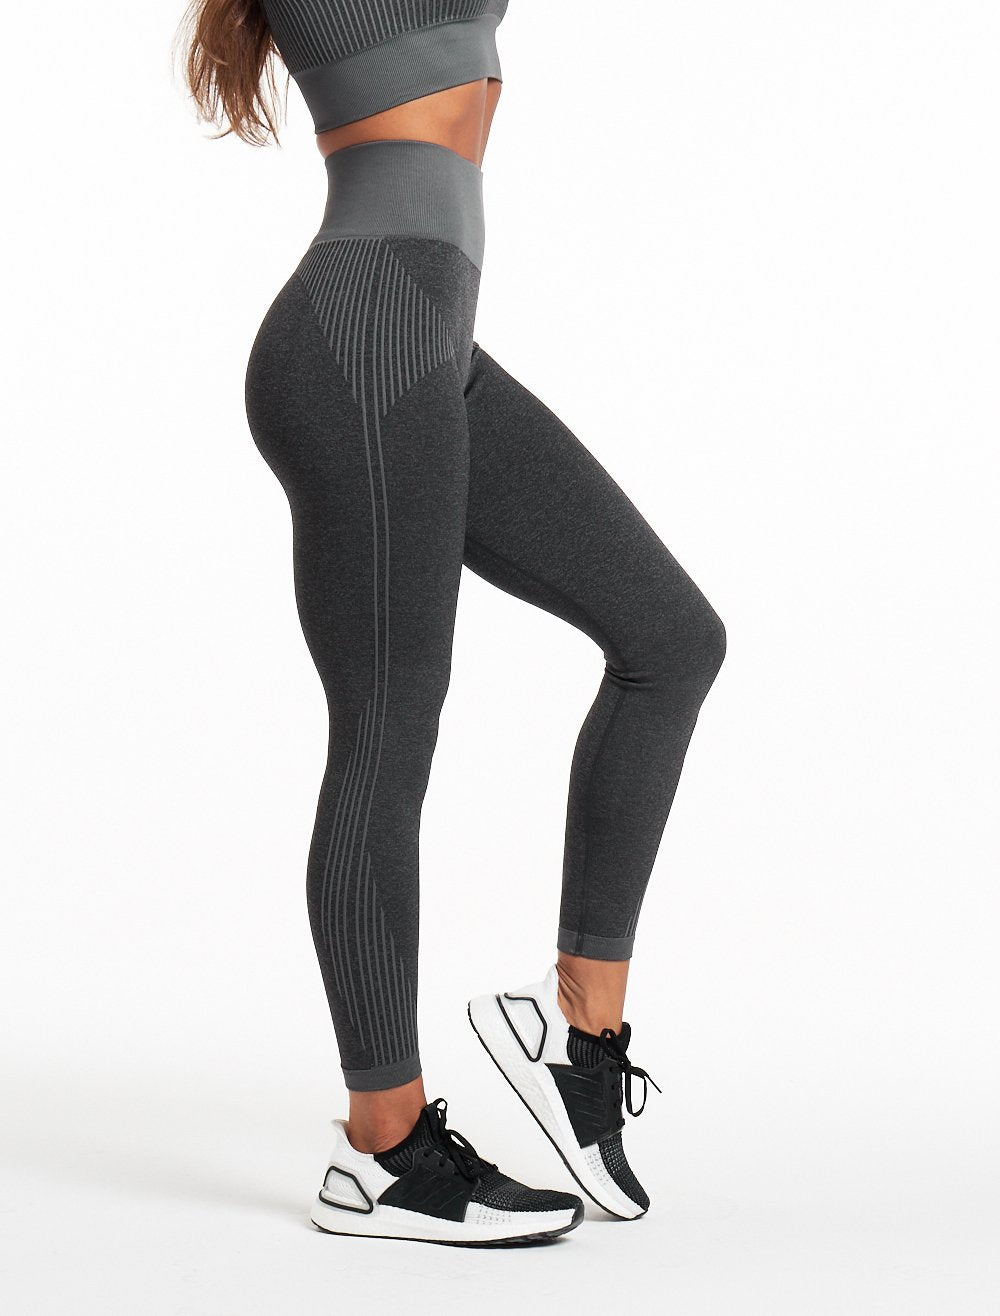 ADAPT Seamless Leggings / Black.Charcoal Pursue Fitness 6